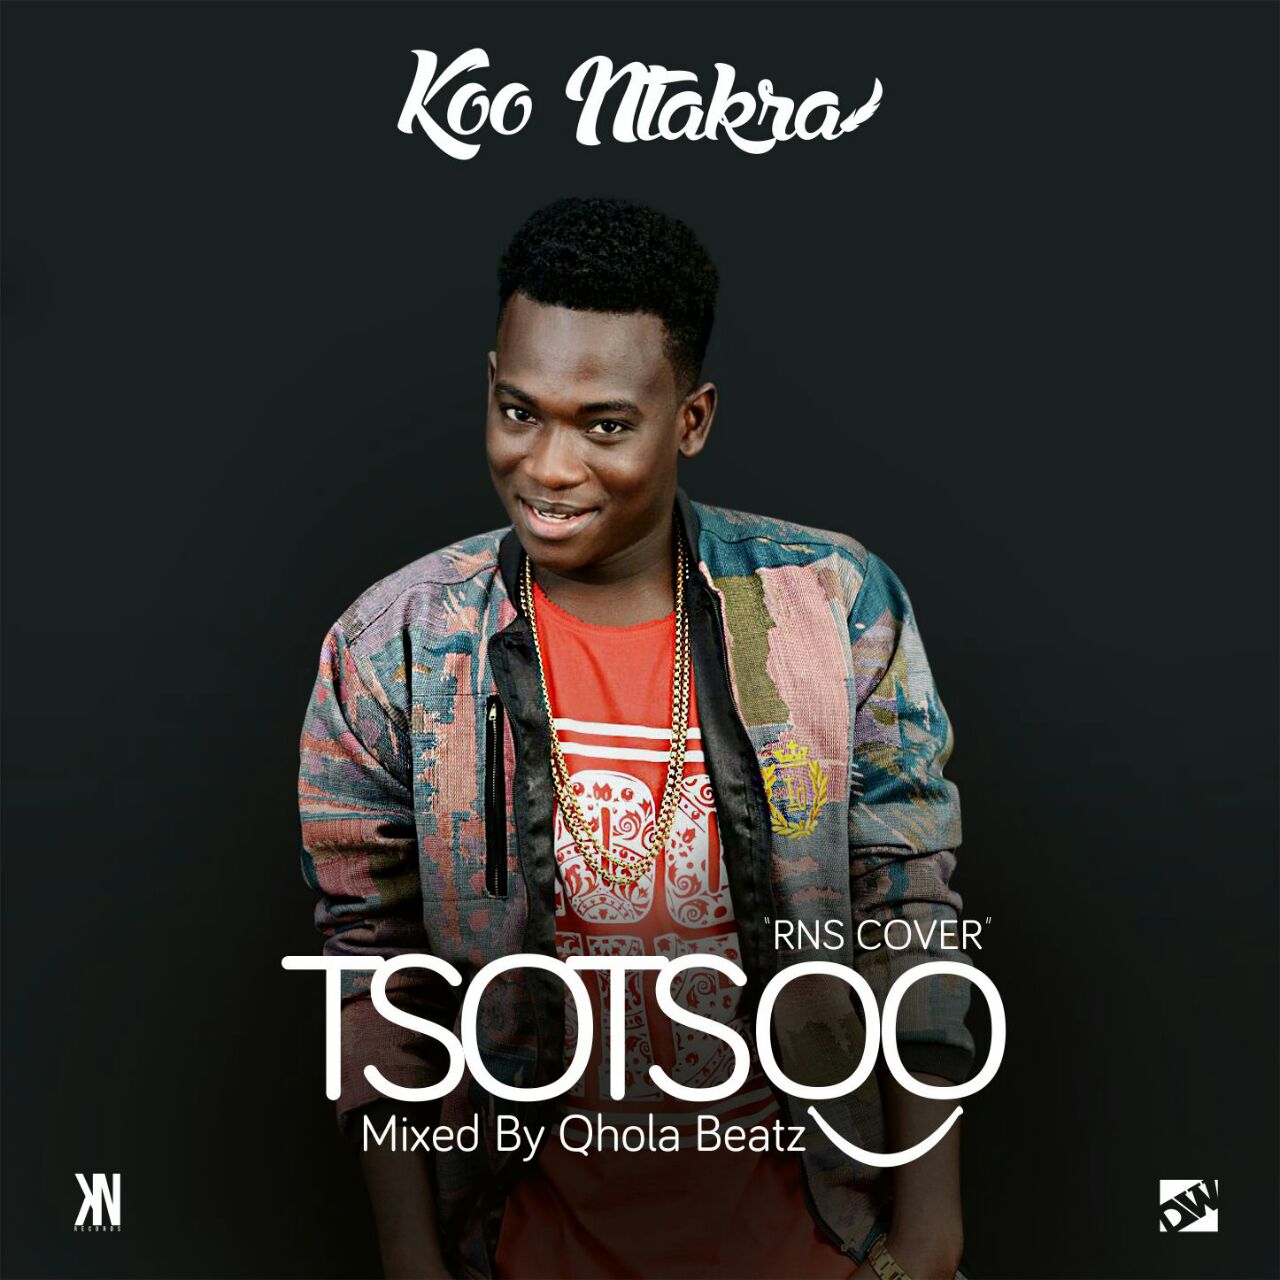 Koo Ntakra – TsoTsoo (RNS Cover) Mixed By Qhola Beatz